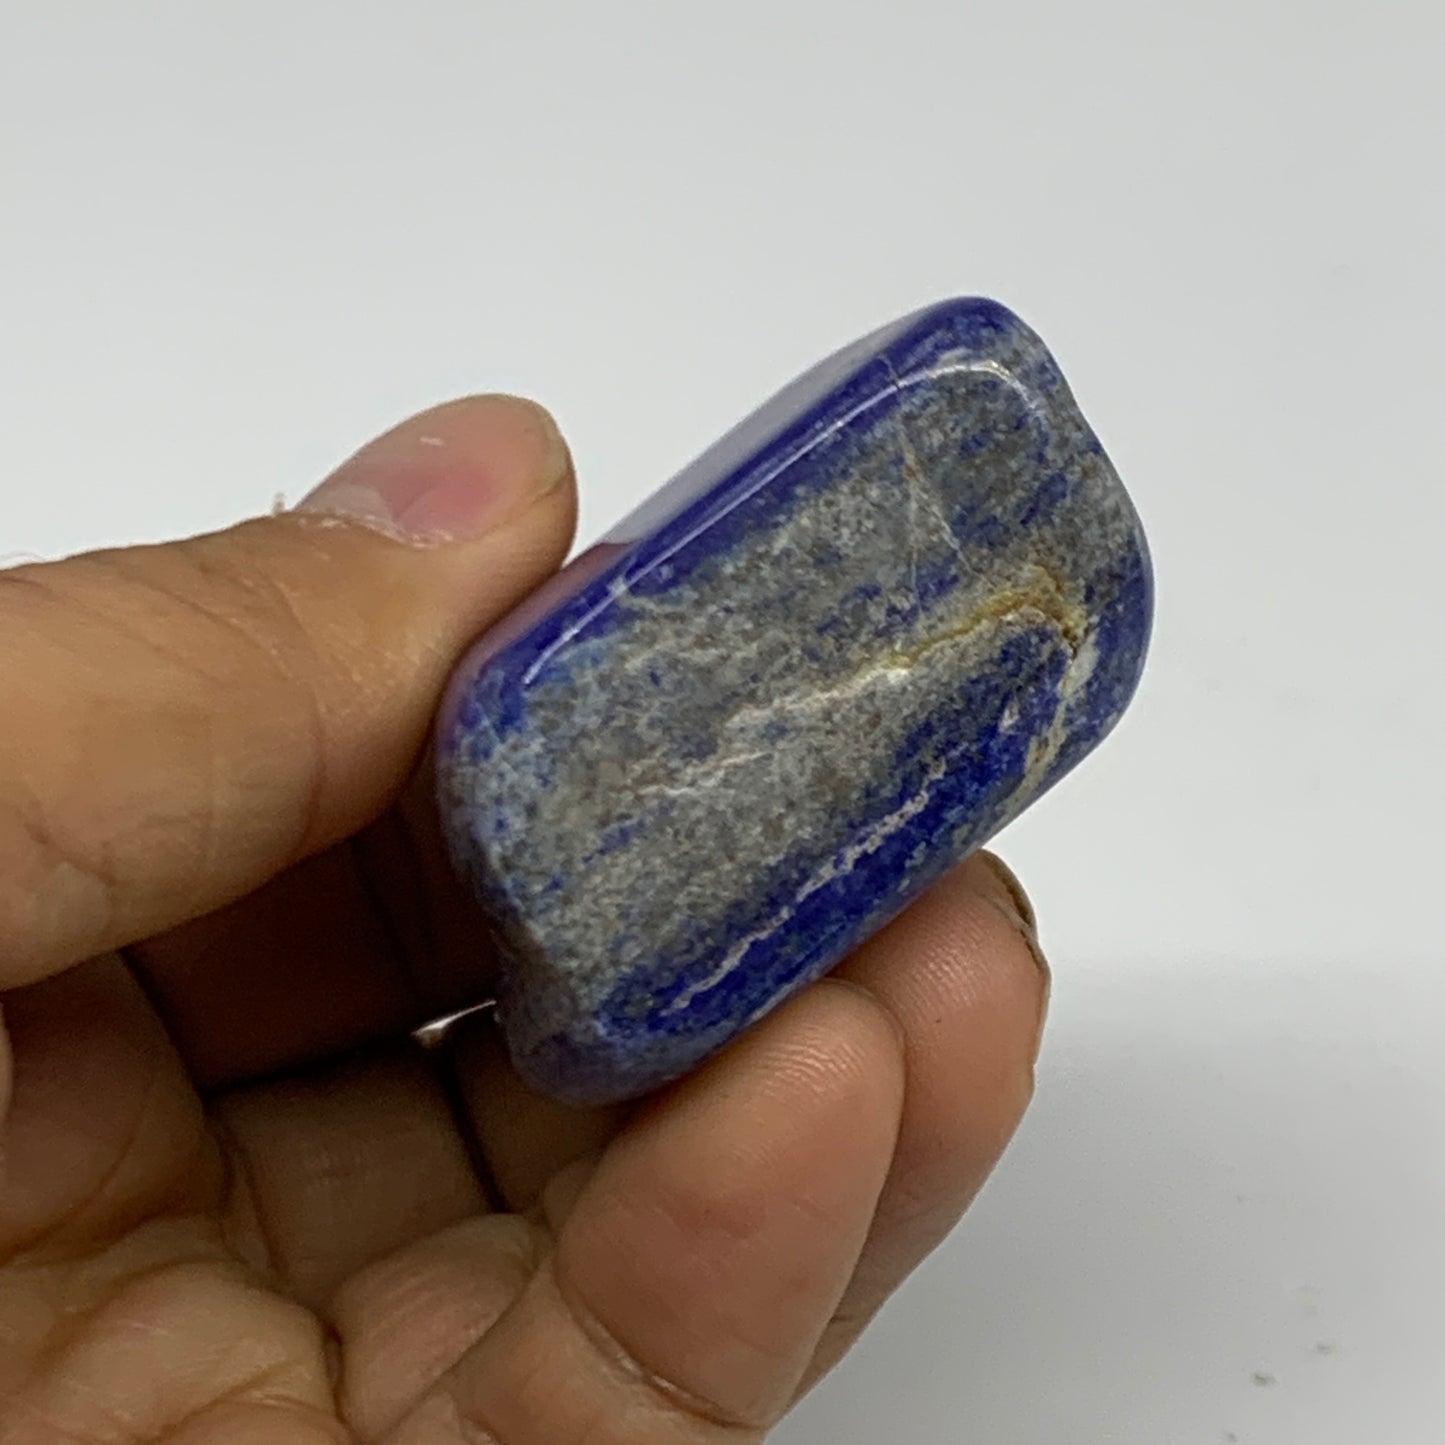 96g, 1.8"x1.6"x0.9",  Natural Freeform Lapis Lazuli from Afghanistan, B33092